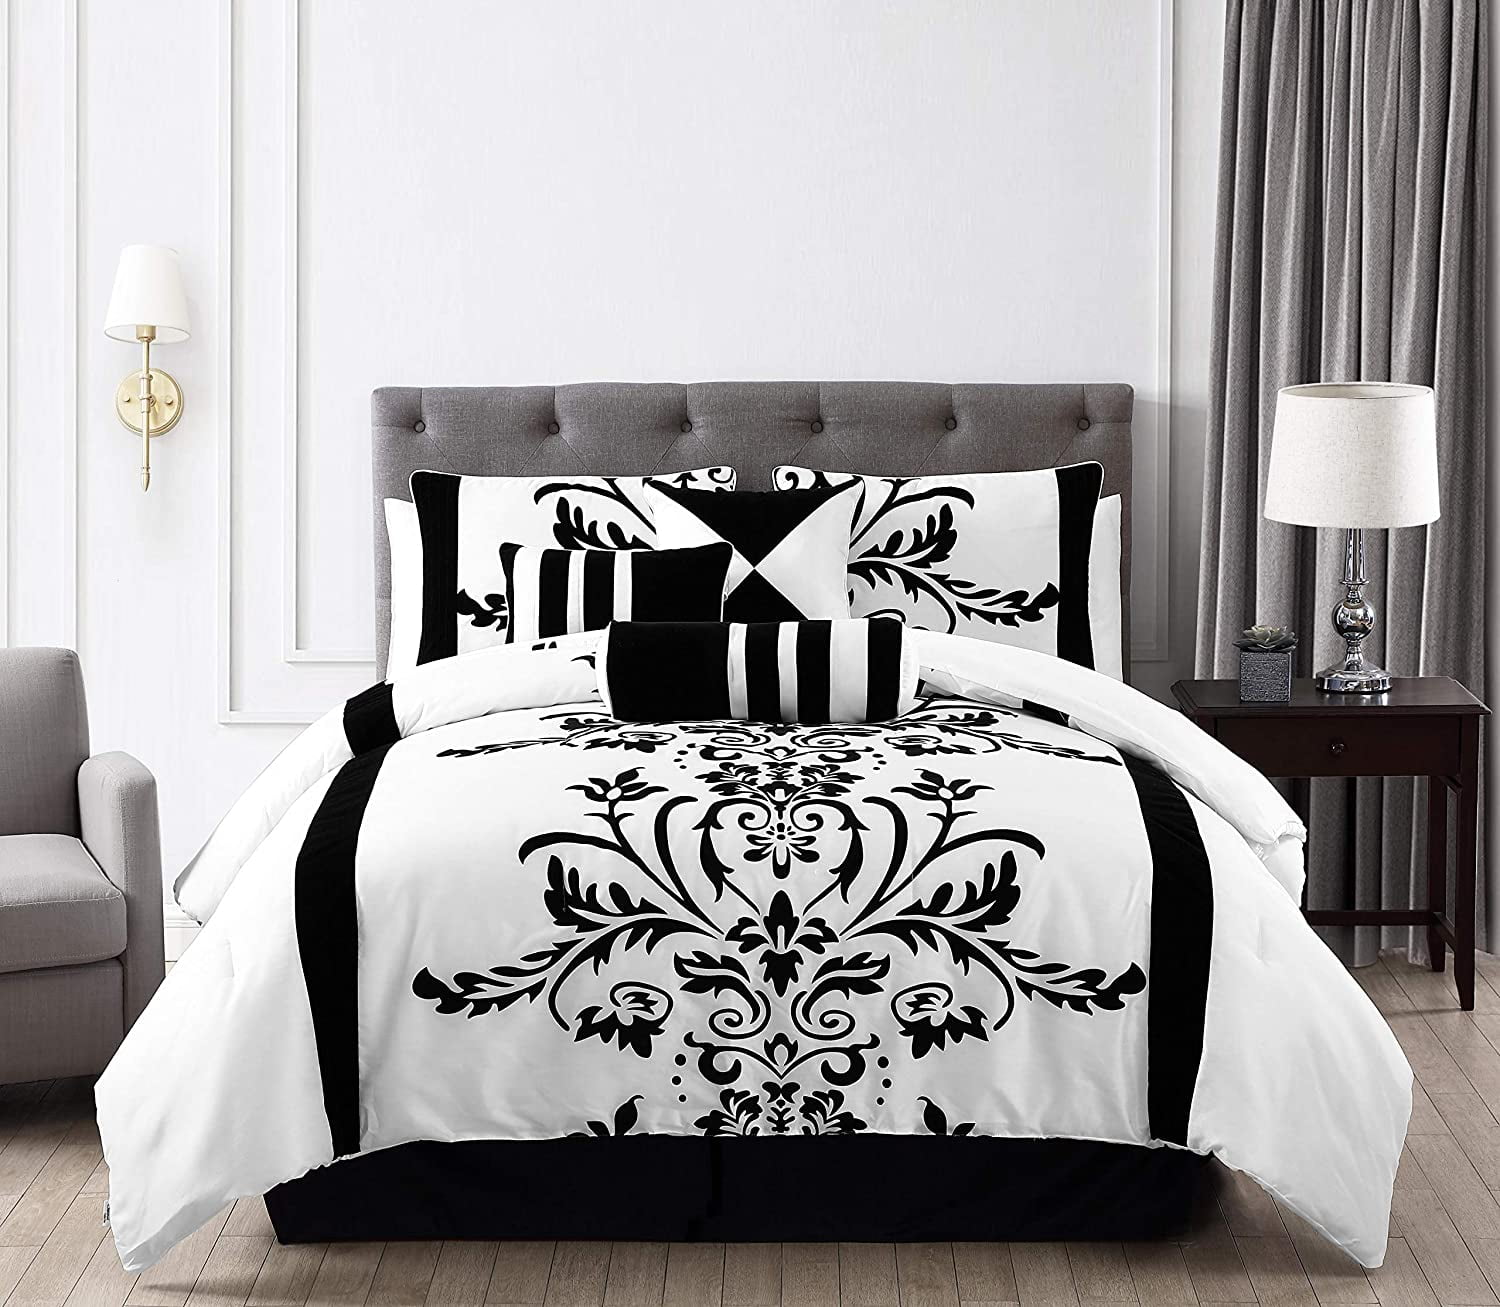 Flock Damask Black Duvet Cover Quilt Bedding Set With Pillowcase Double King 